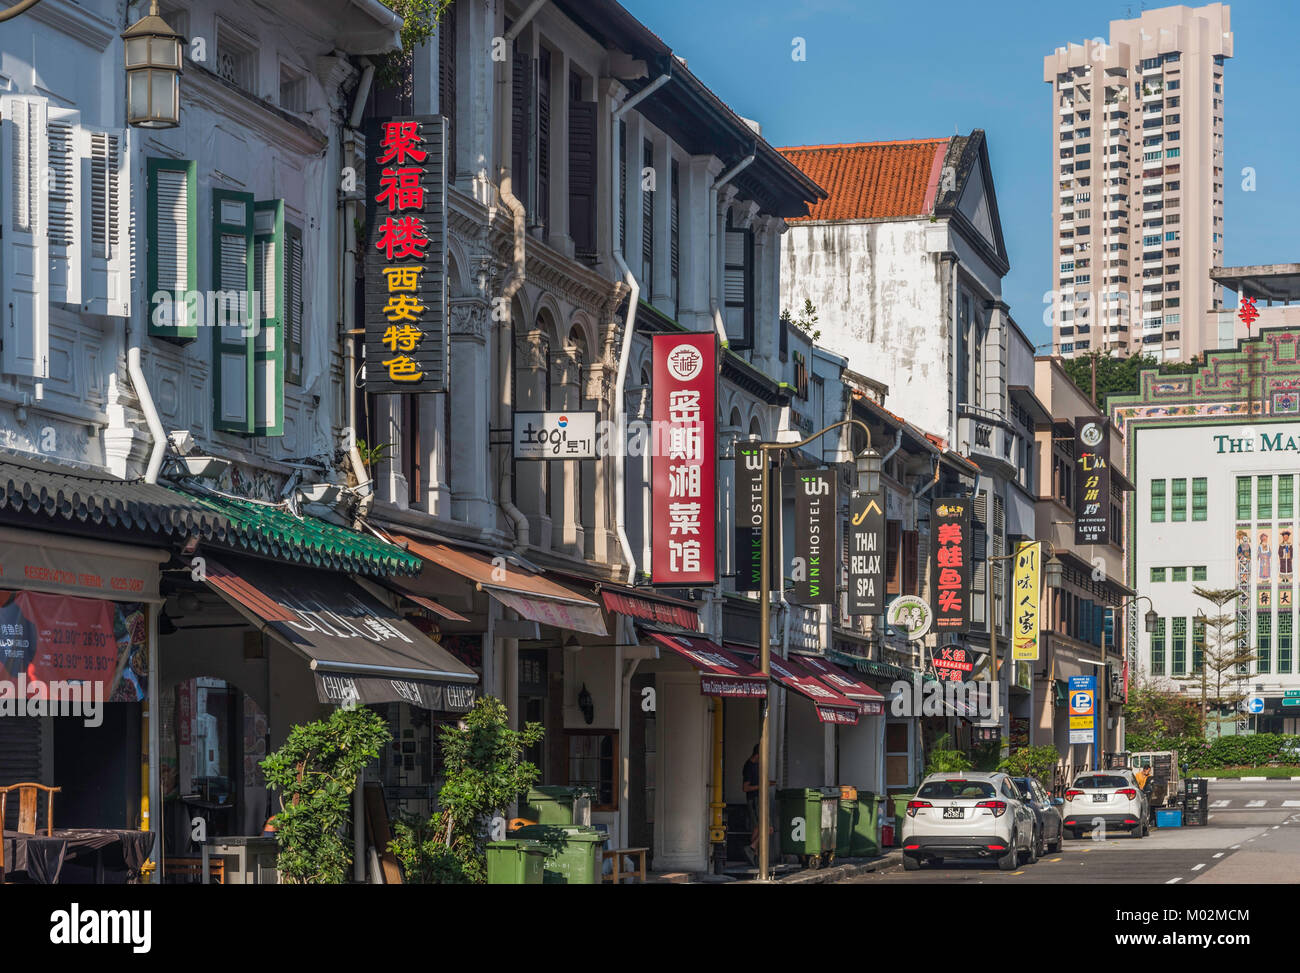 Mosque Street, Chinatown, Singapore Stock Photo